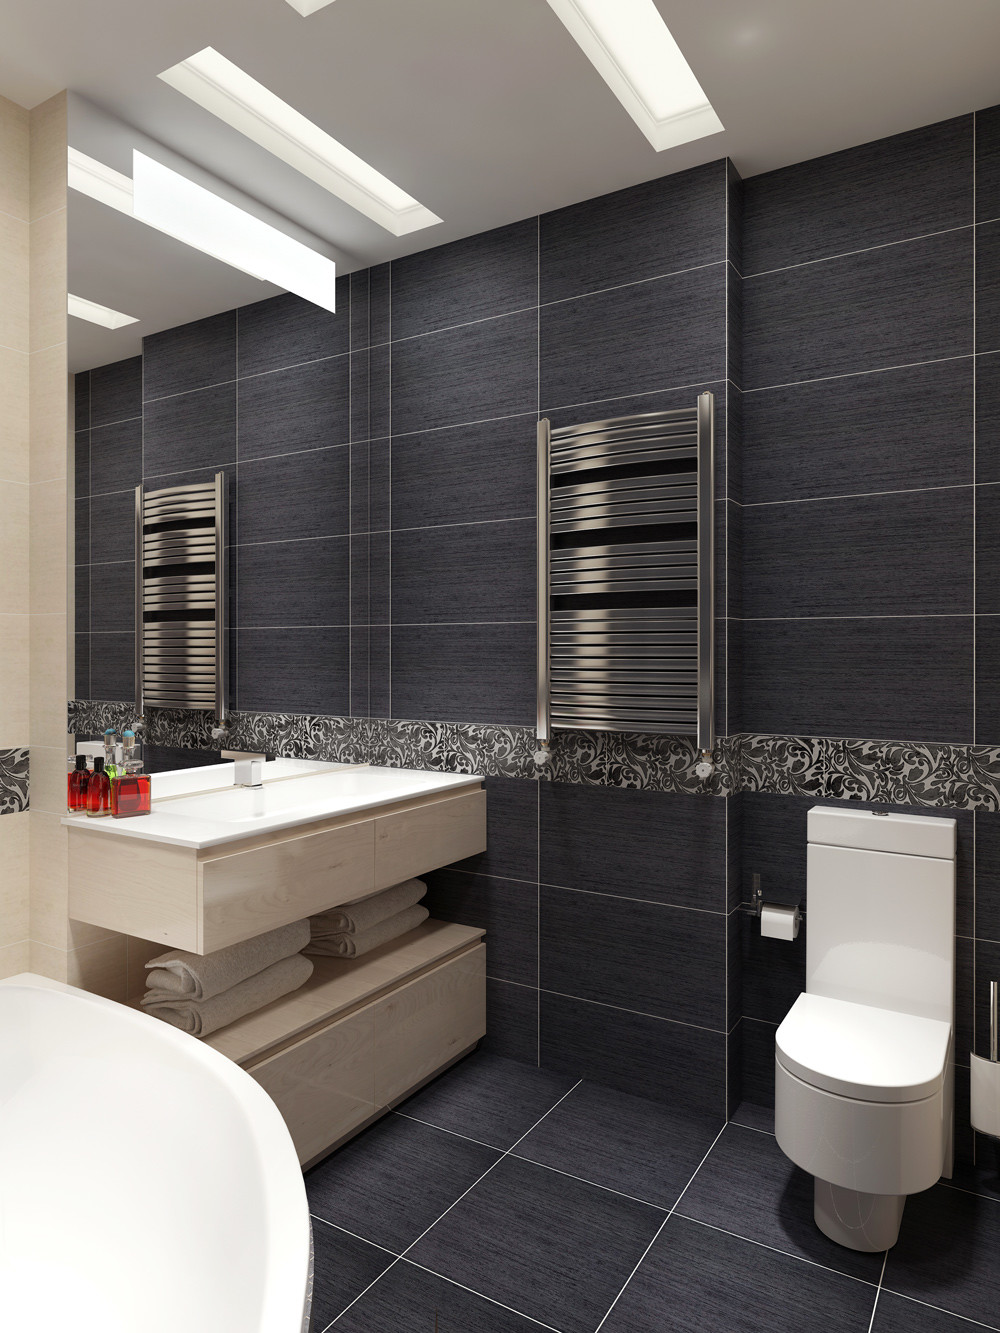 Matte Finish Bathroom Tiles